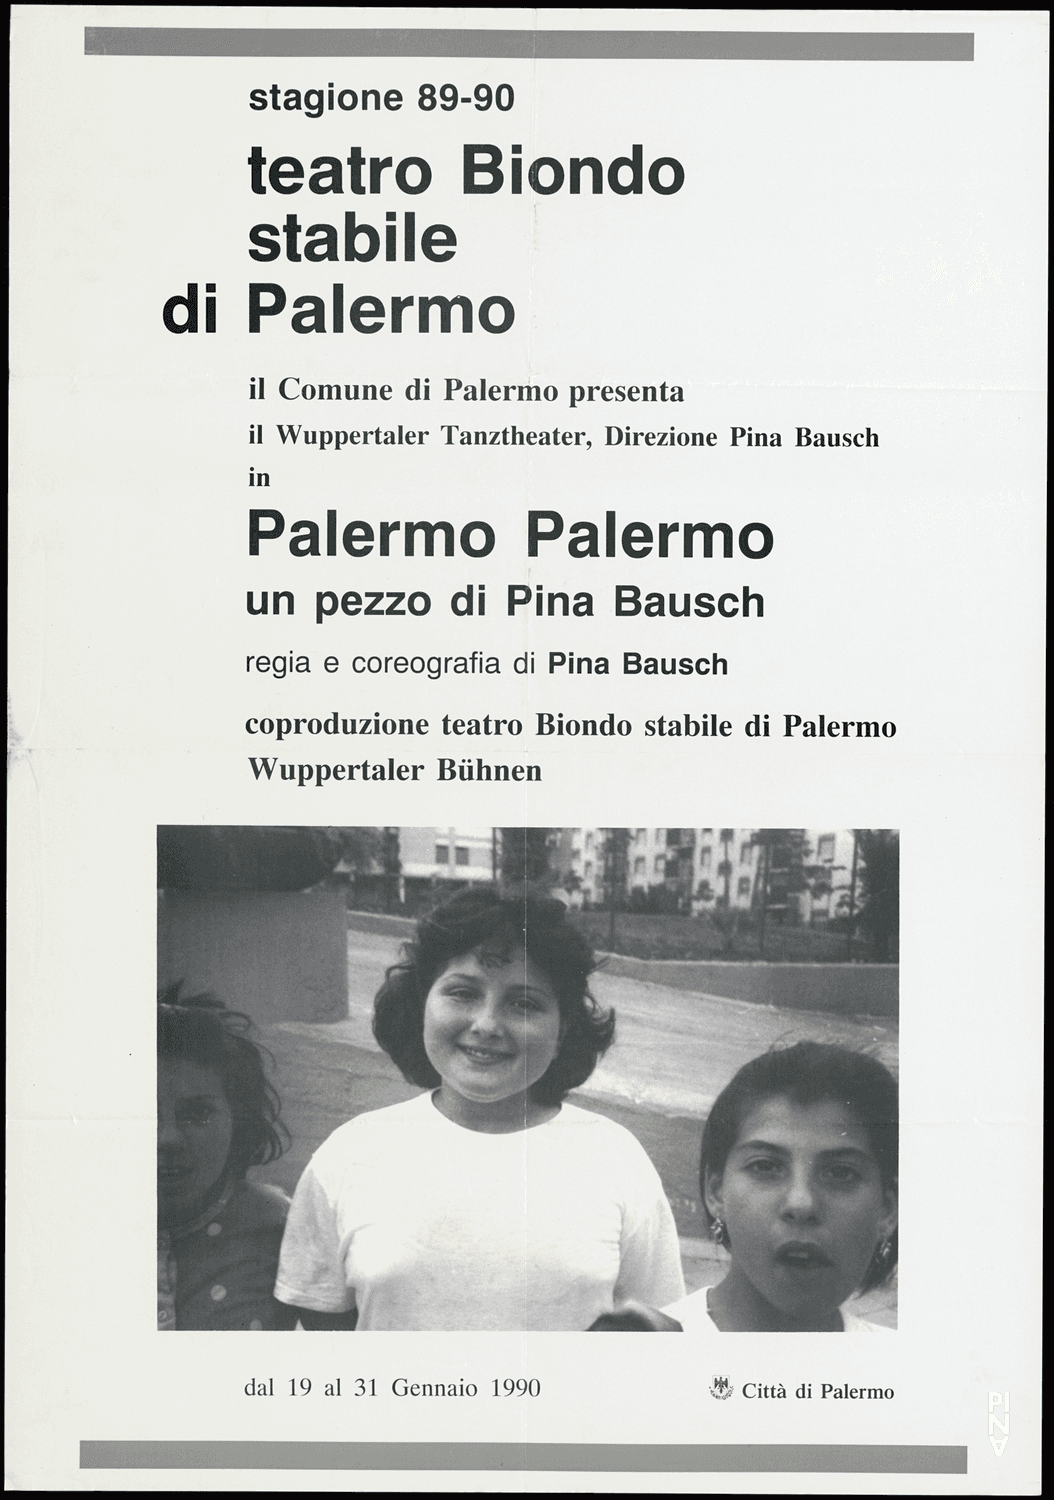 © Teatro Biondo Palermo, Pina Bausch Foundation